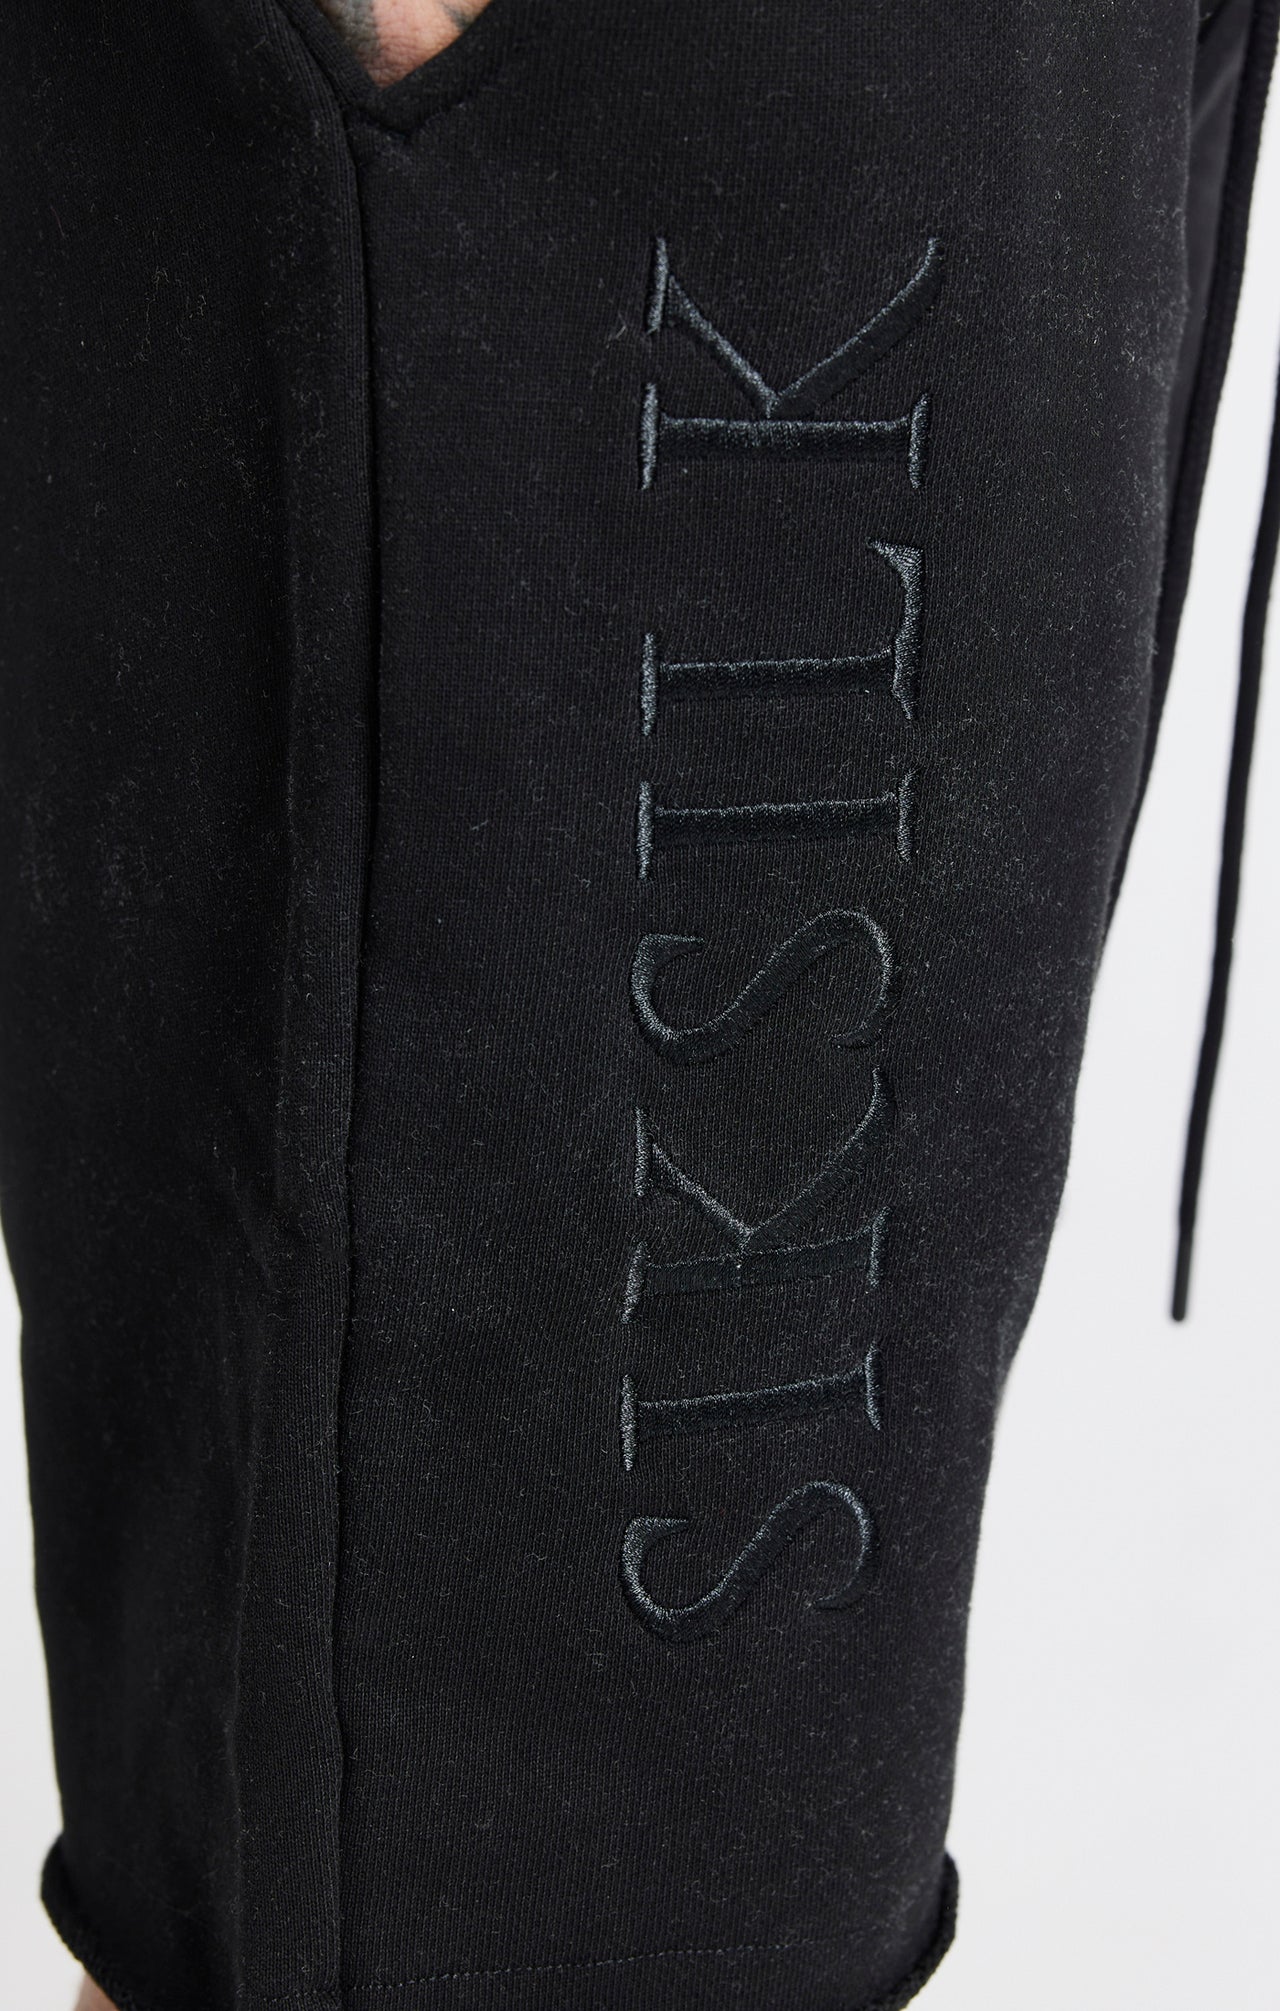 SikSilk X Steve Aoki Loop Back Shorts - Black Pink & White (2)